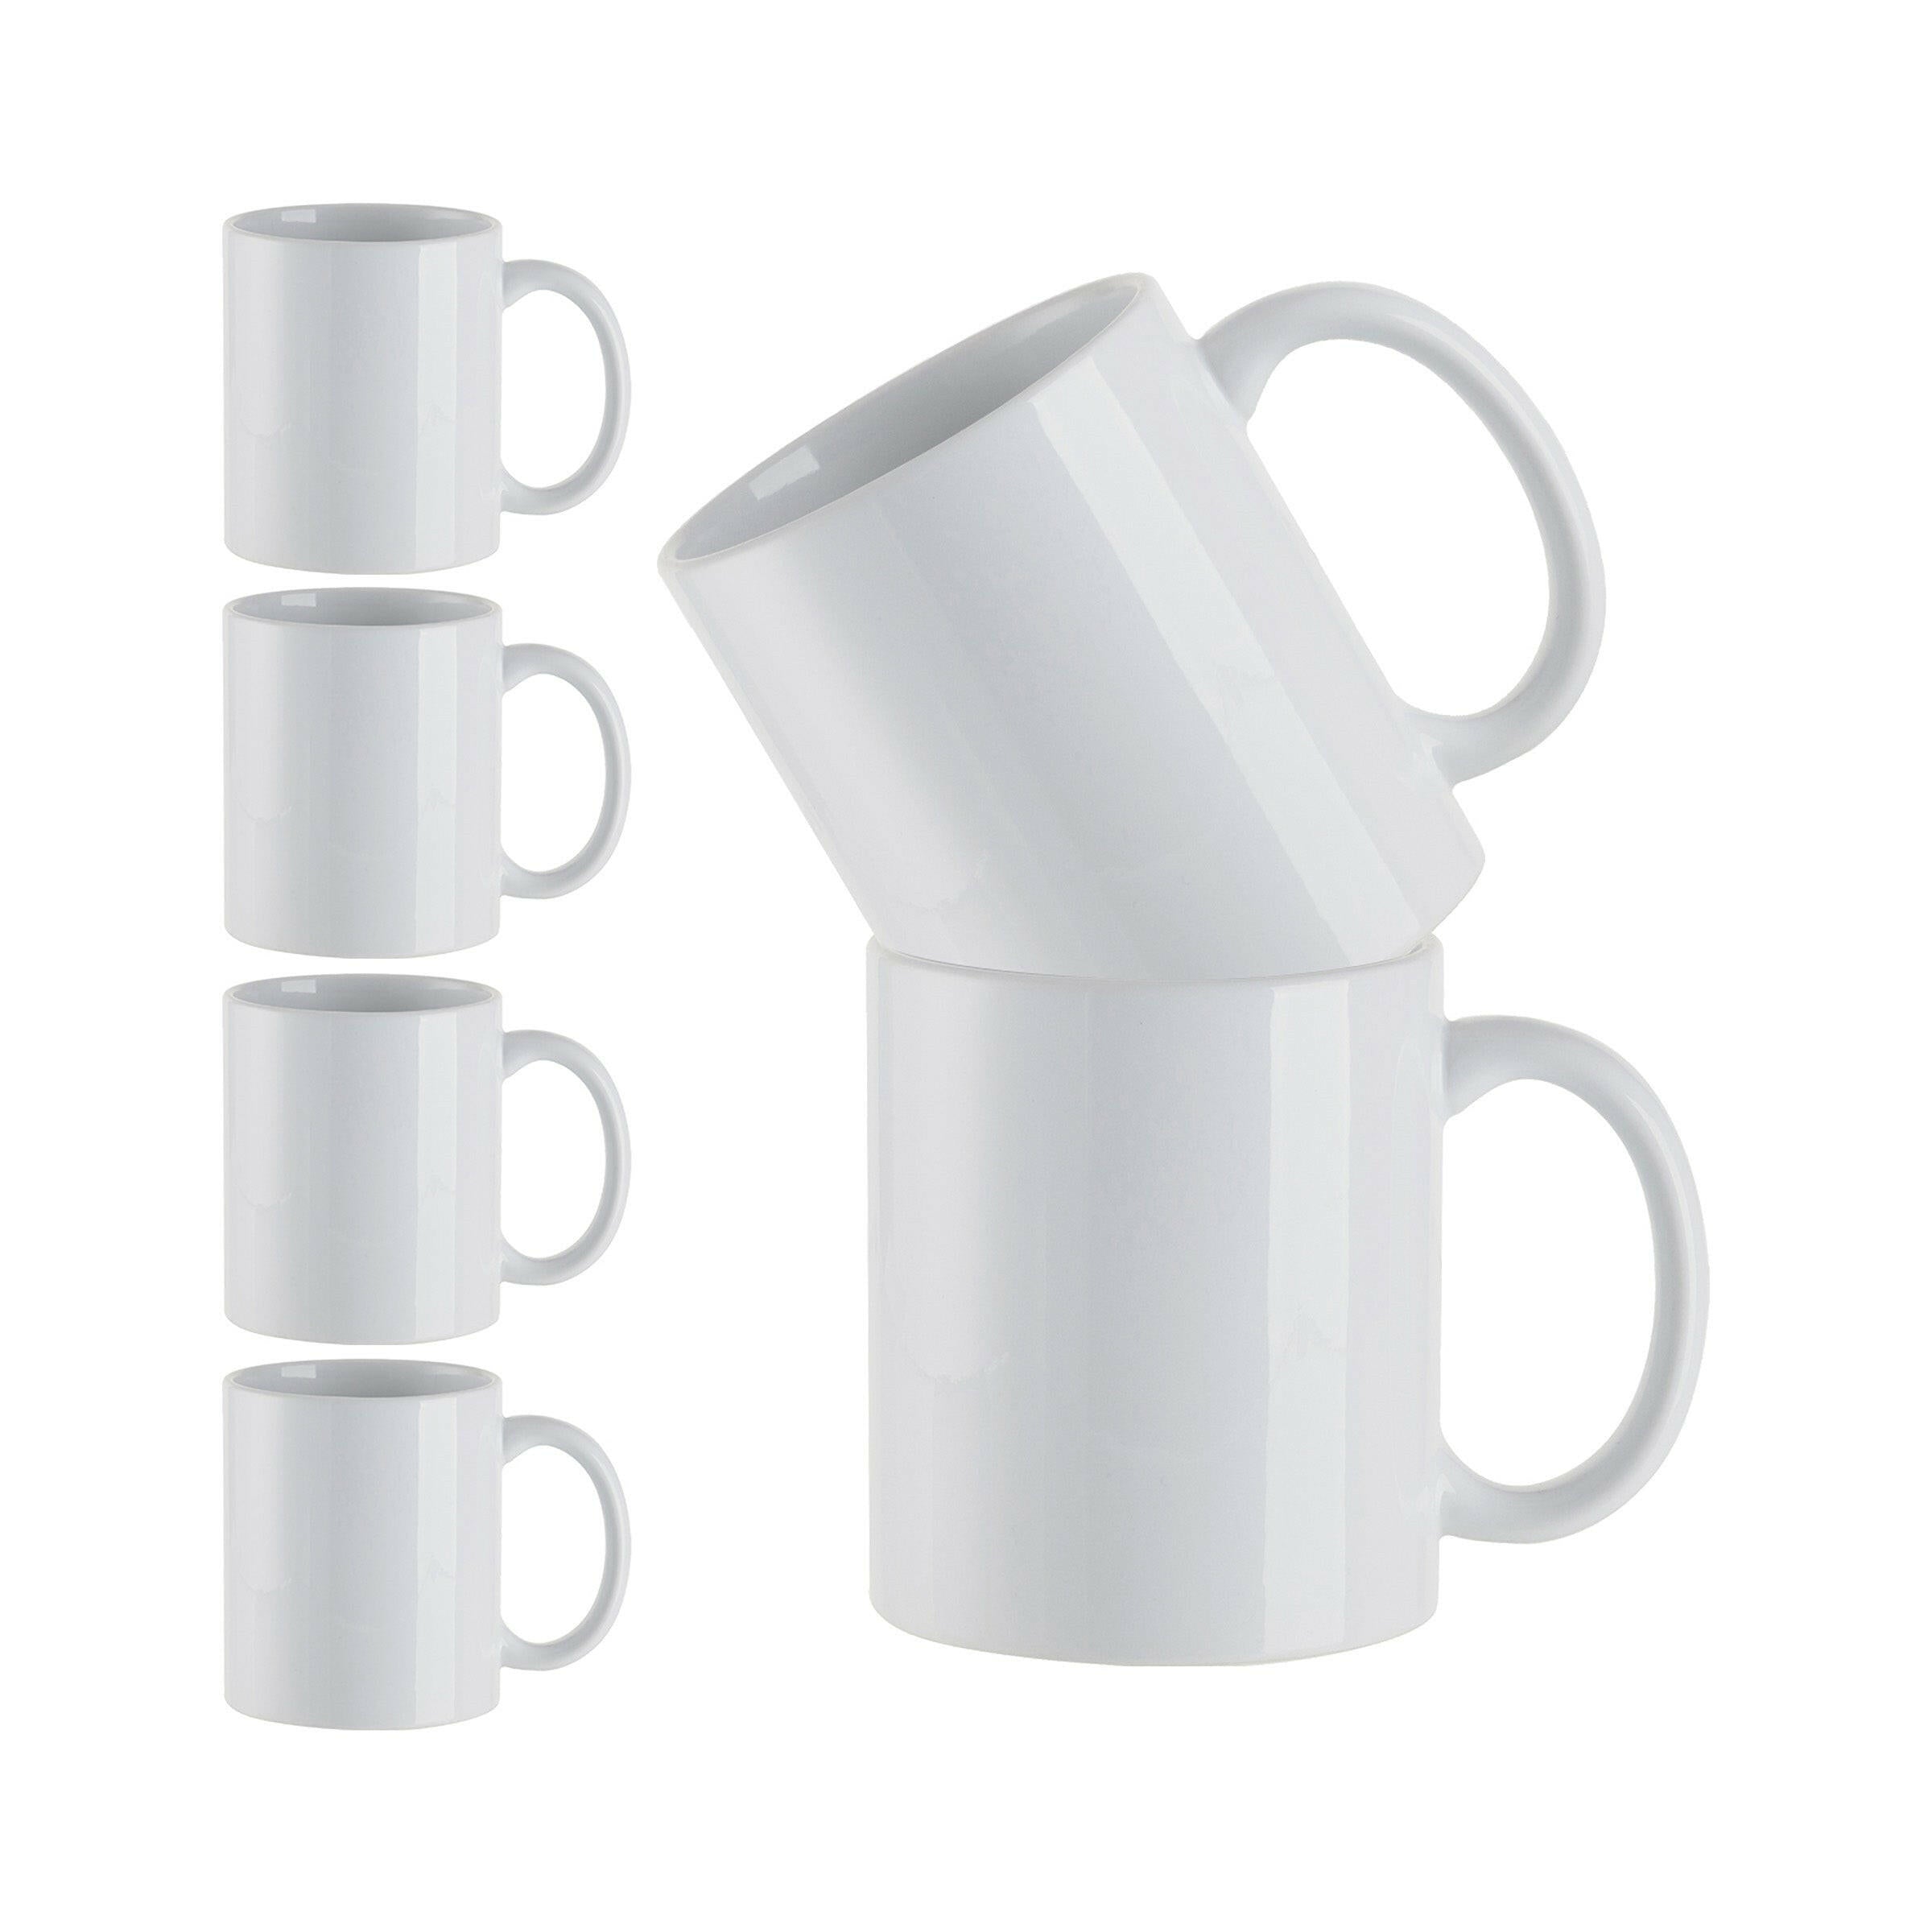 6 white sublimation coffee mugs